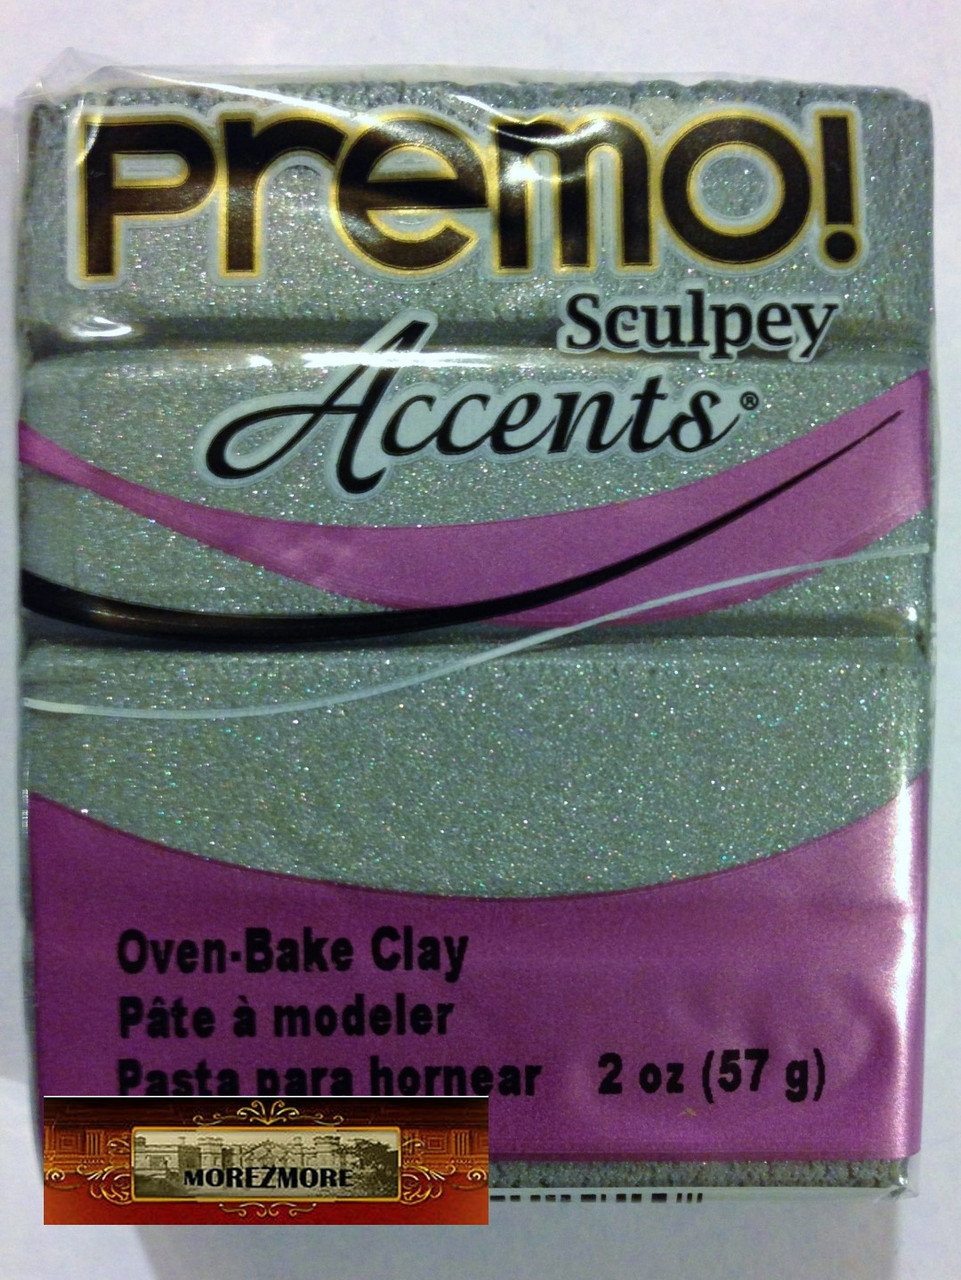 Sculpey Premo - 2 oz, Light Pink